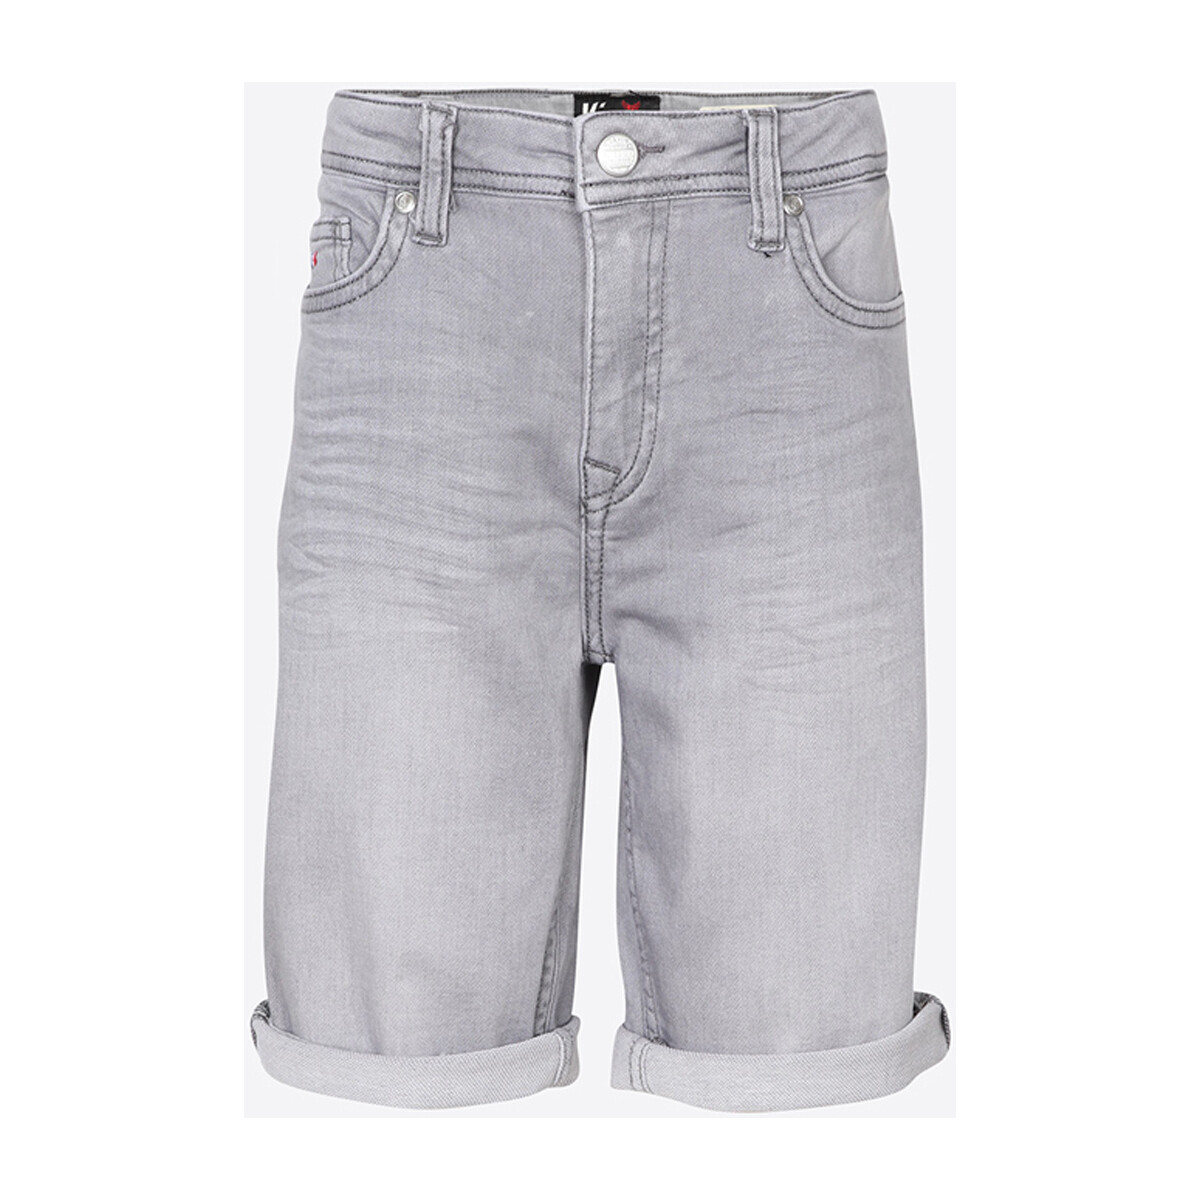 Vêtements Garçon Shorts / Bermudas Kaporal DECO Bleu